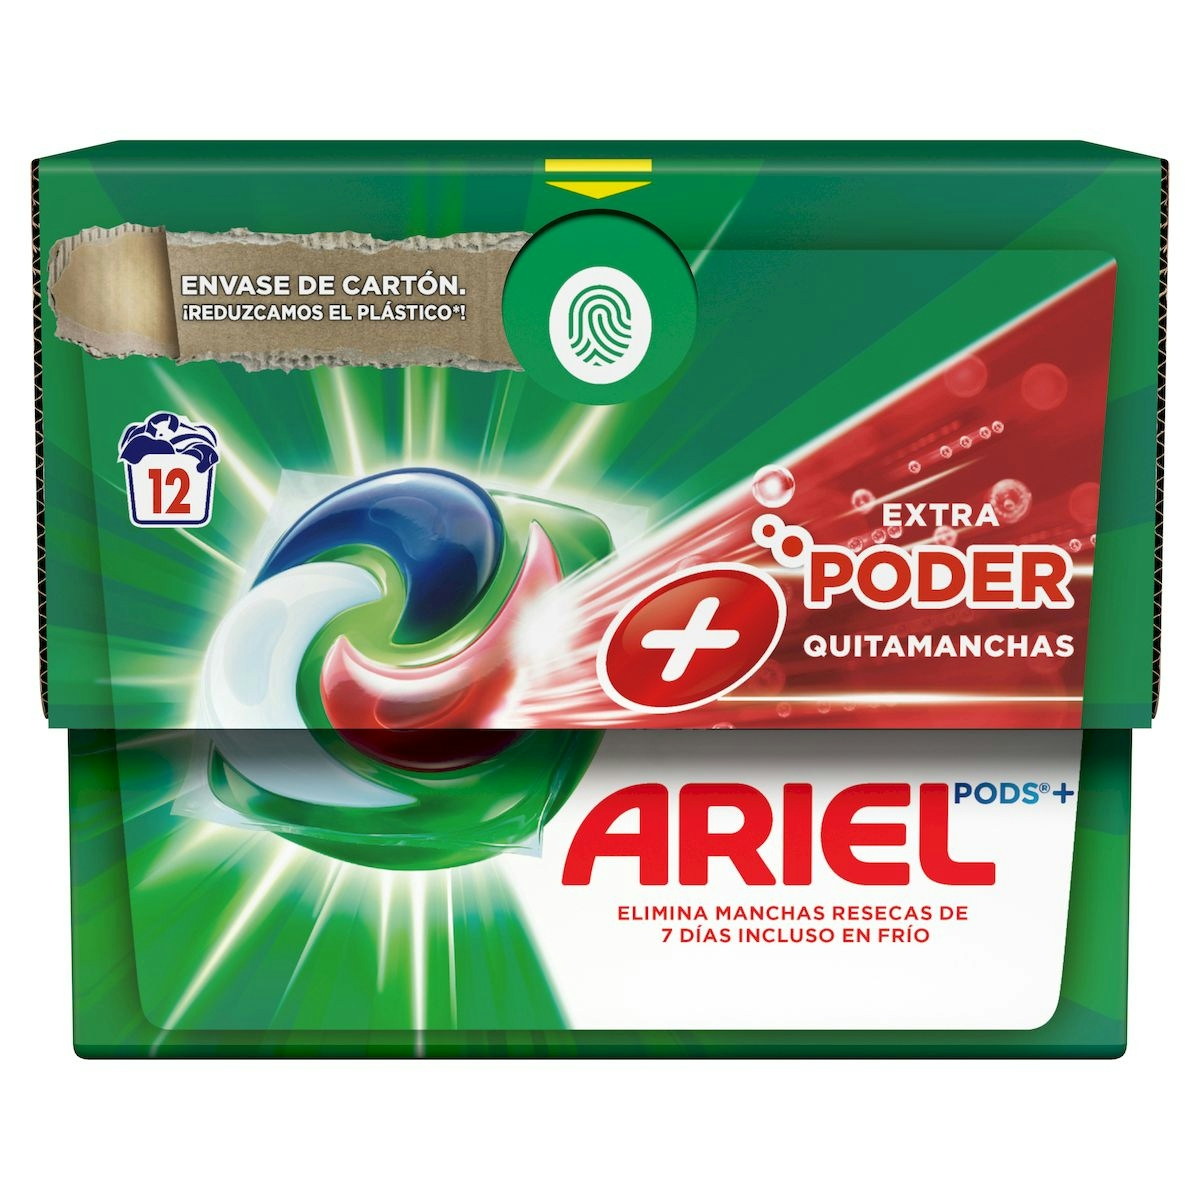 Ariel Pods+ Extra Poder Quitamanchas 12